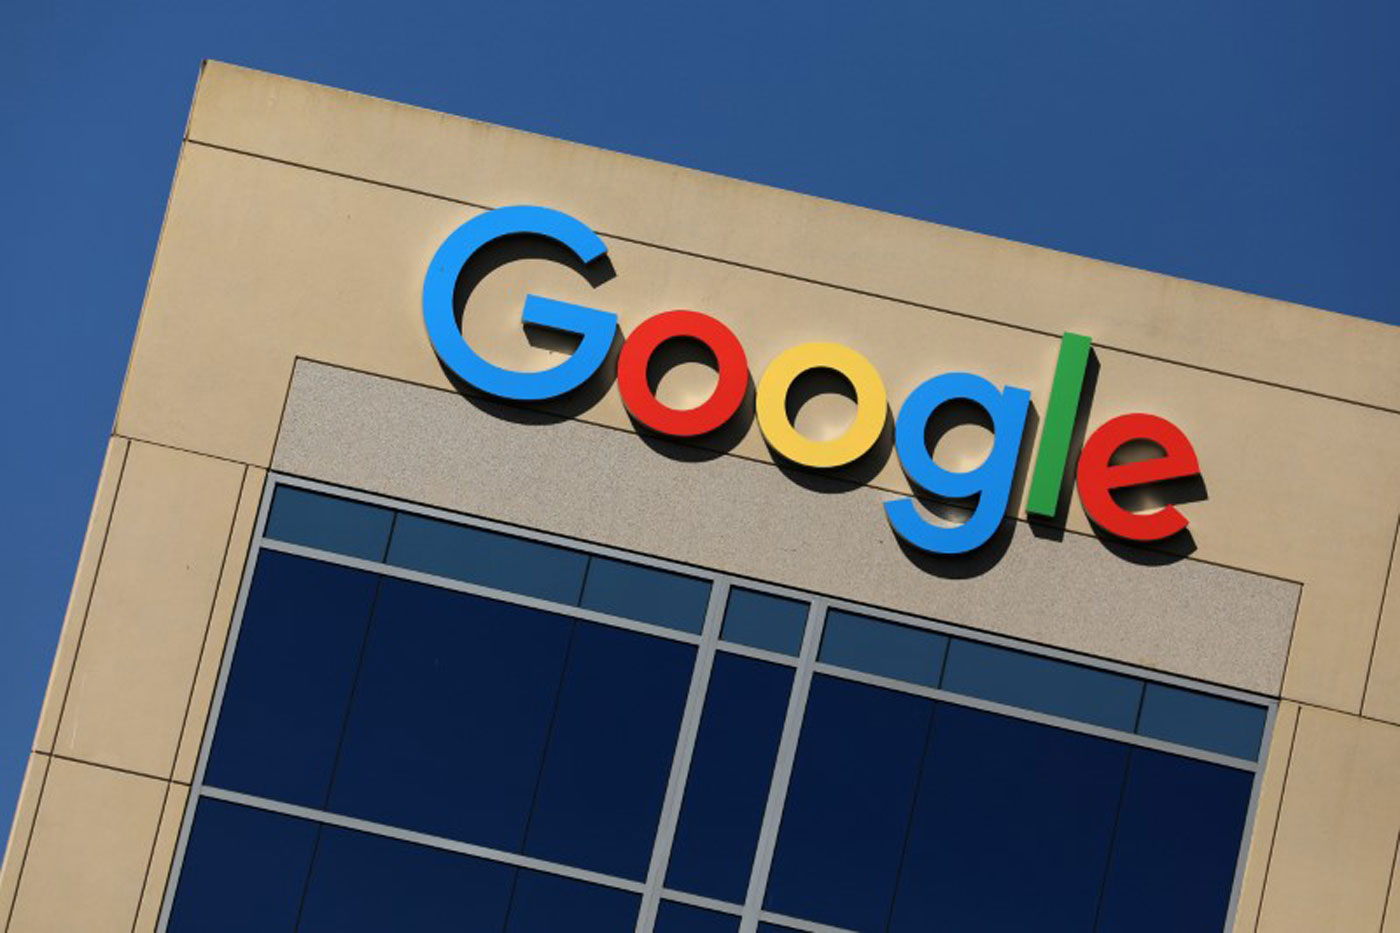 Google dice que bloqueó cuentas por campaña de desinformación ligada a Irán